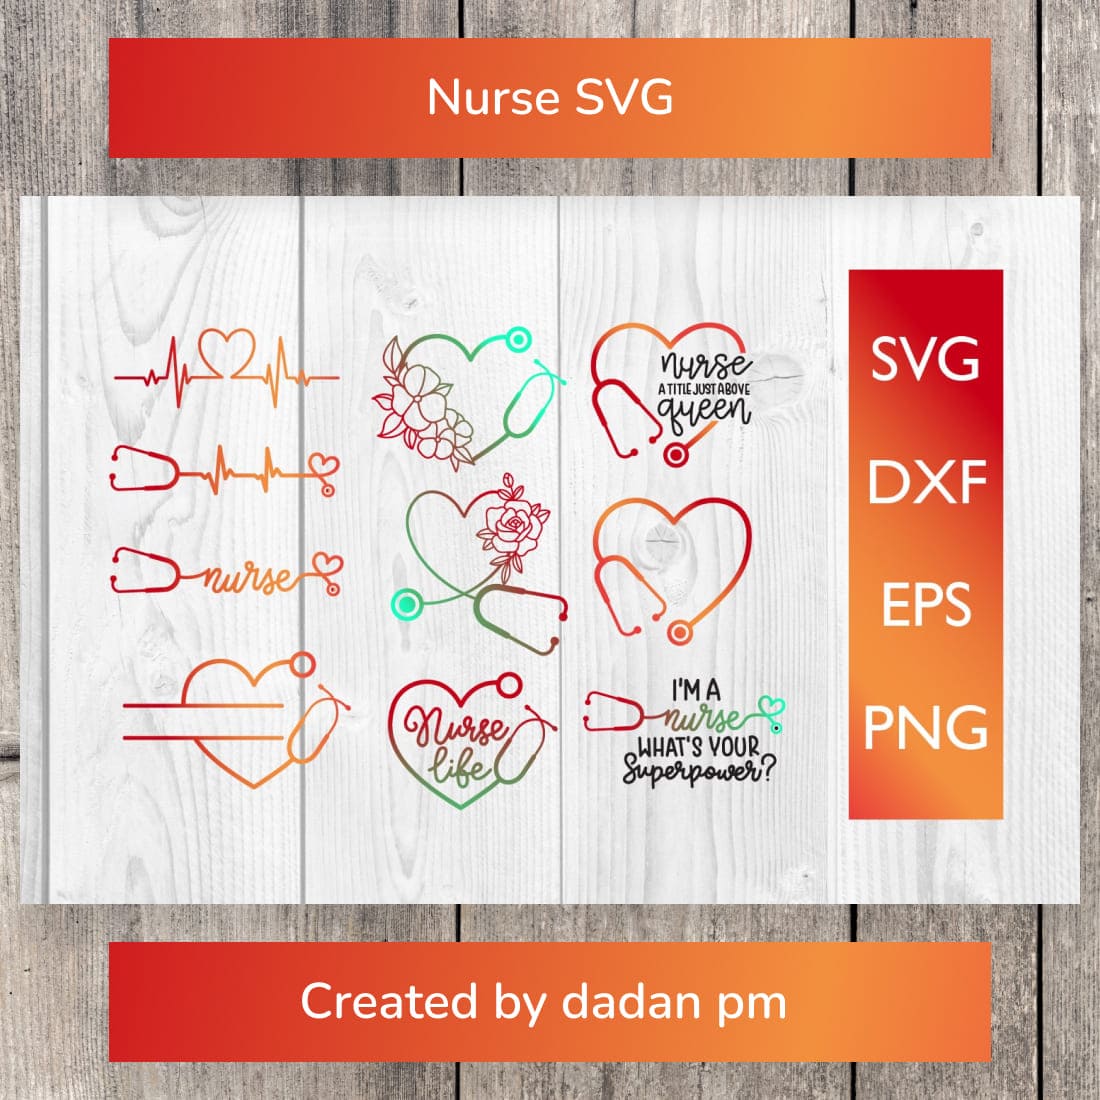 Nurse SVG main cover.